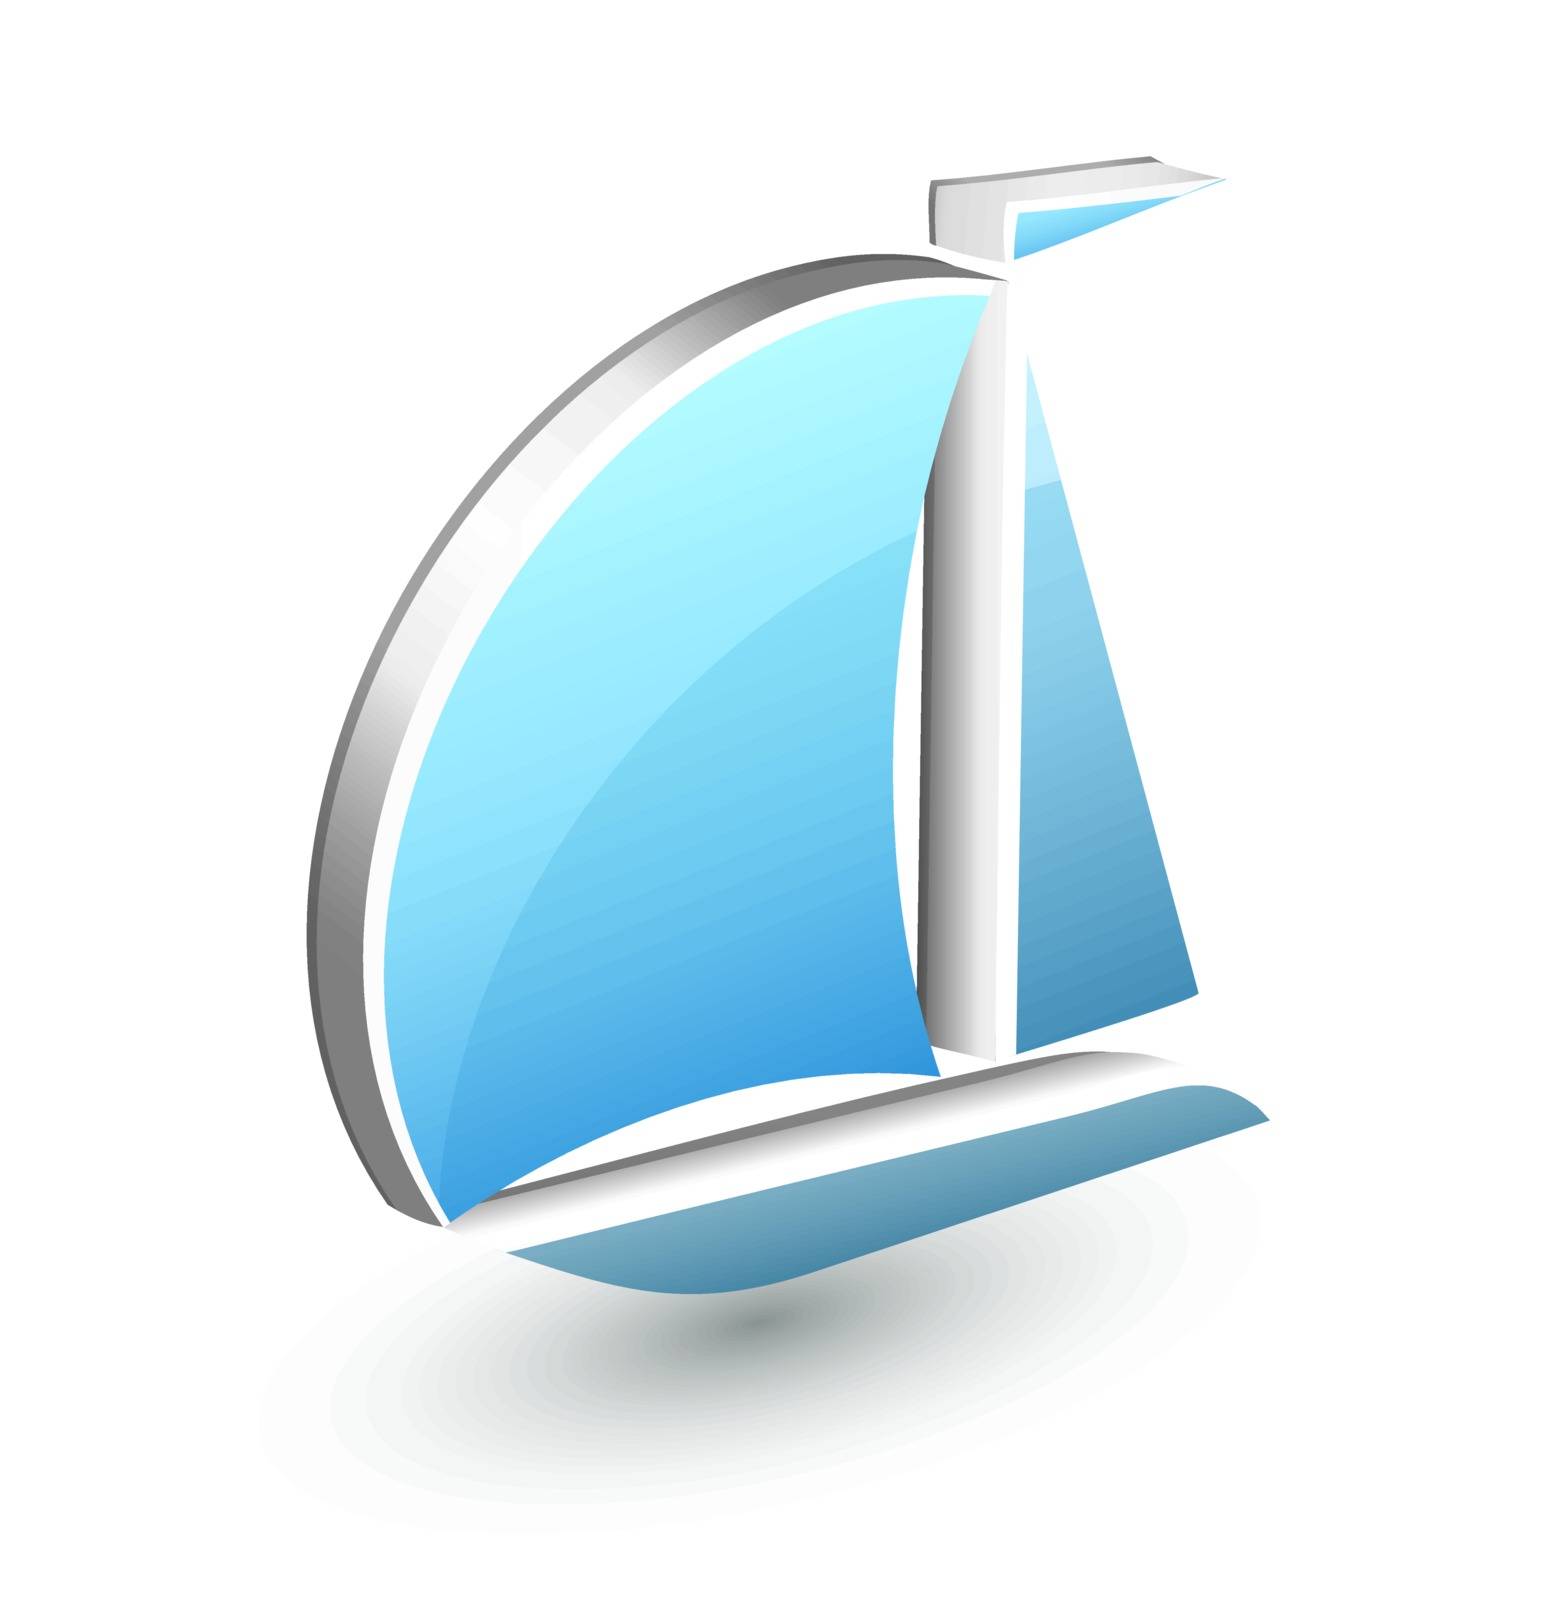 Boat yacht icon by Alexzel